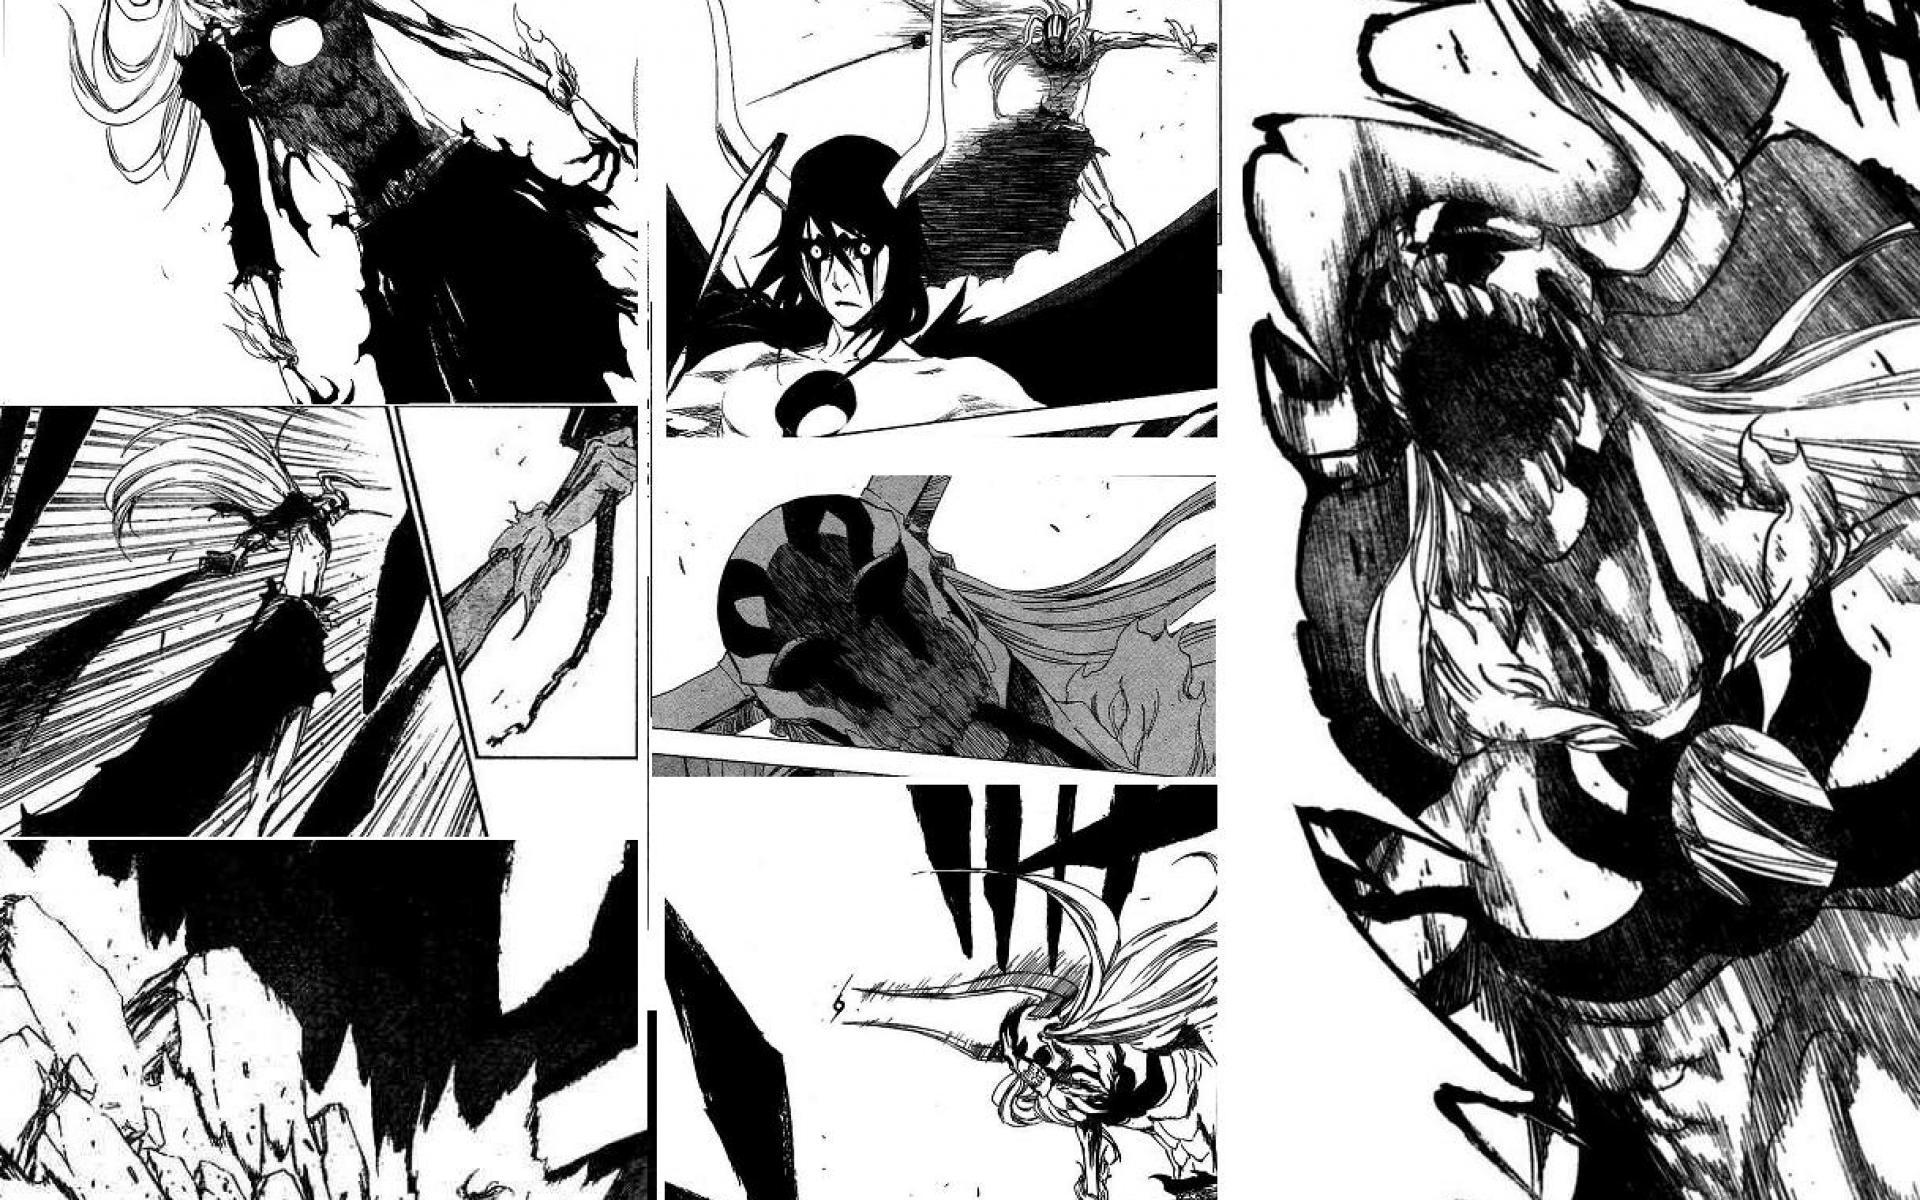 Manga Panel Wallpapers - Top Free Manga Panel Backgrounds - WallpaperAccess